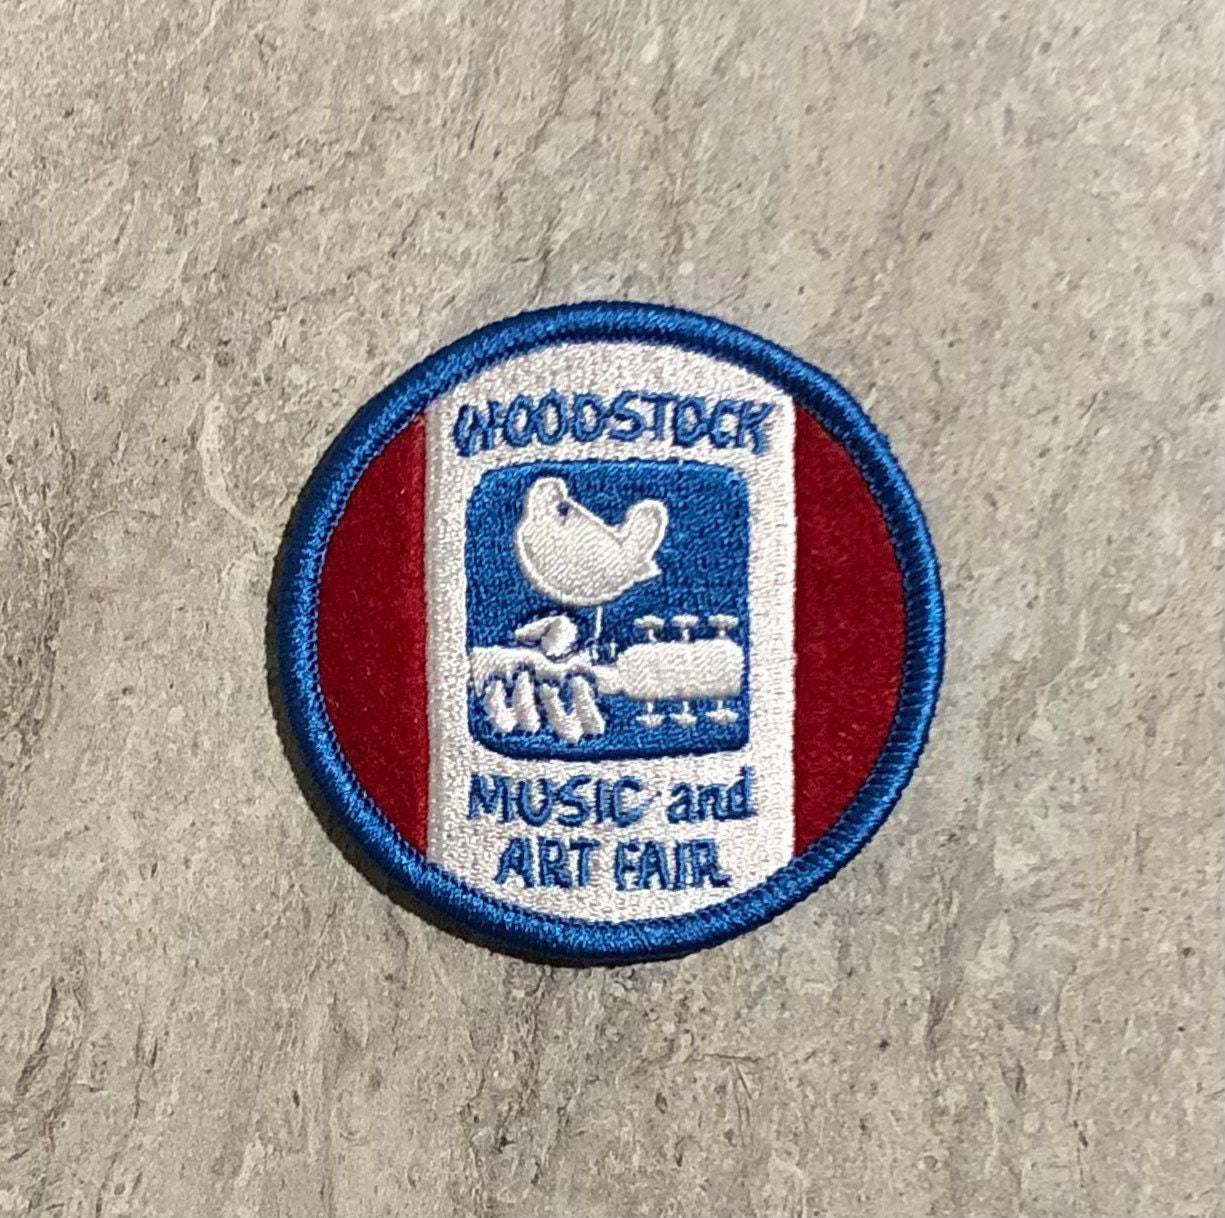 Retro Woodstock Music and Art Fair Patch